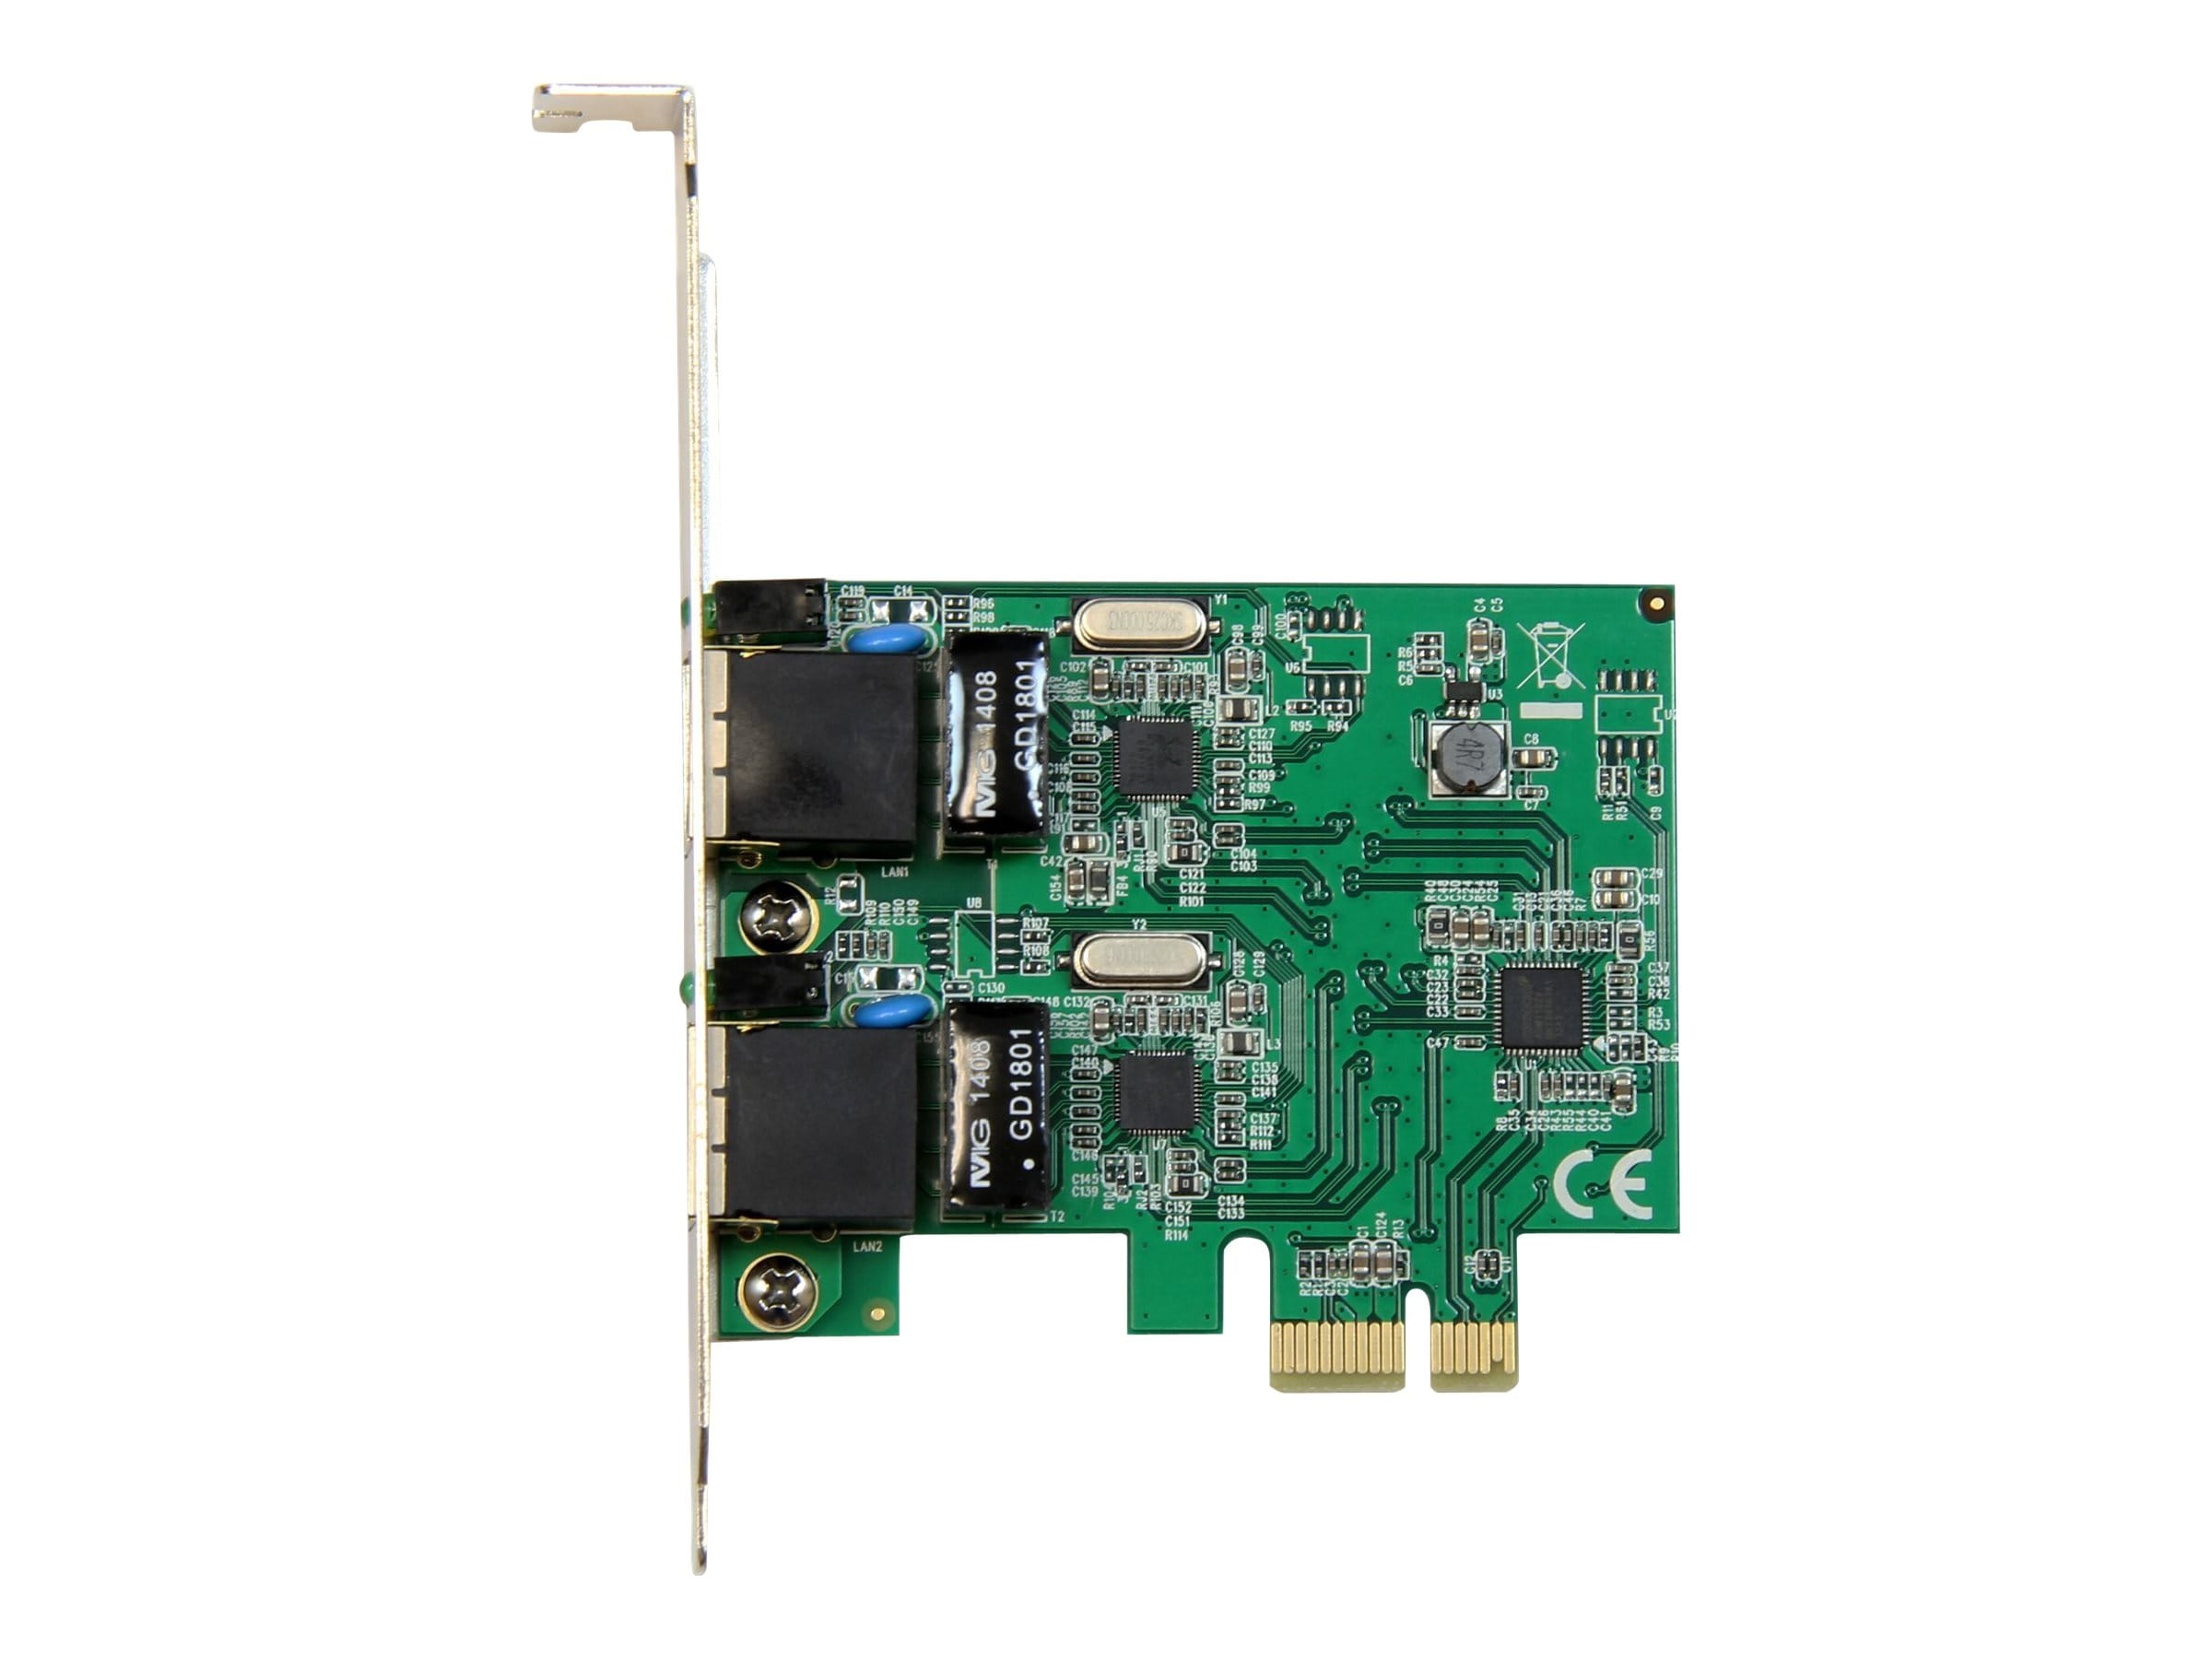 StarTech.com Dual Port Gigabit PCI Express Server Network Adapter Card - 1 Gbps PCIe NIC - Dual Port Server Adapter - 2 Port Ethernet Card (ST1000SPEXD4)